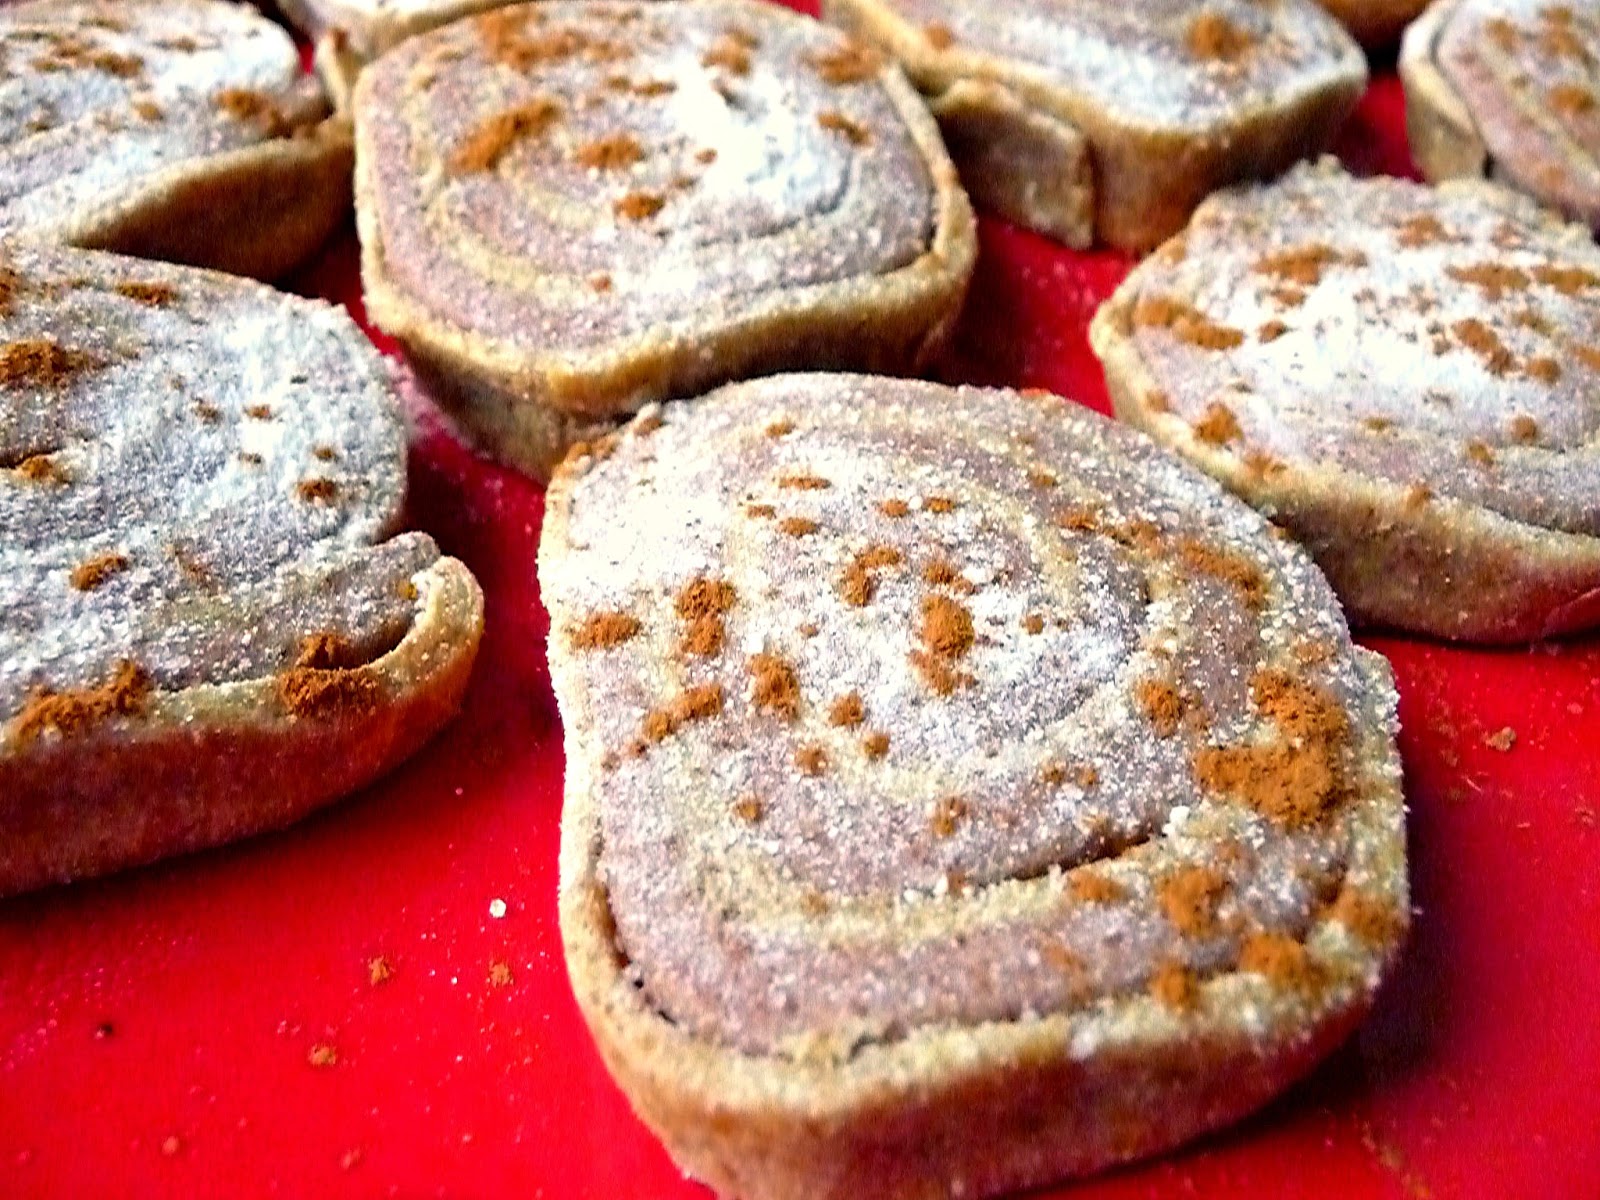 http://theseamanmom.com/raspberry-biscuits-recipe/